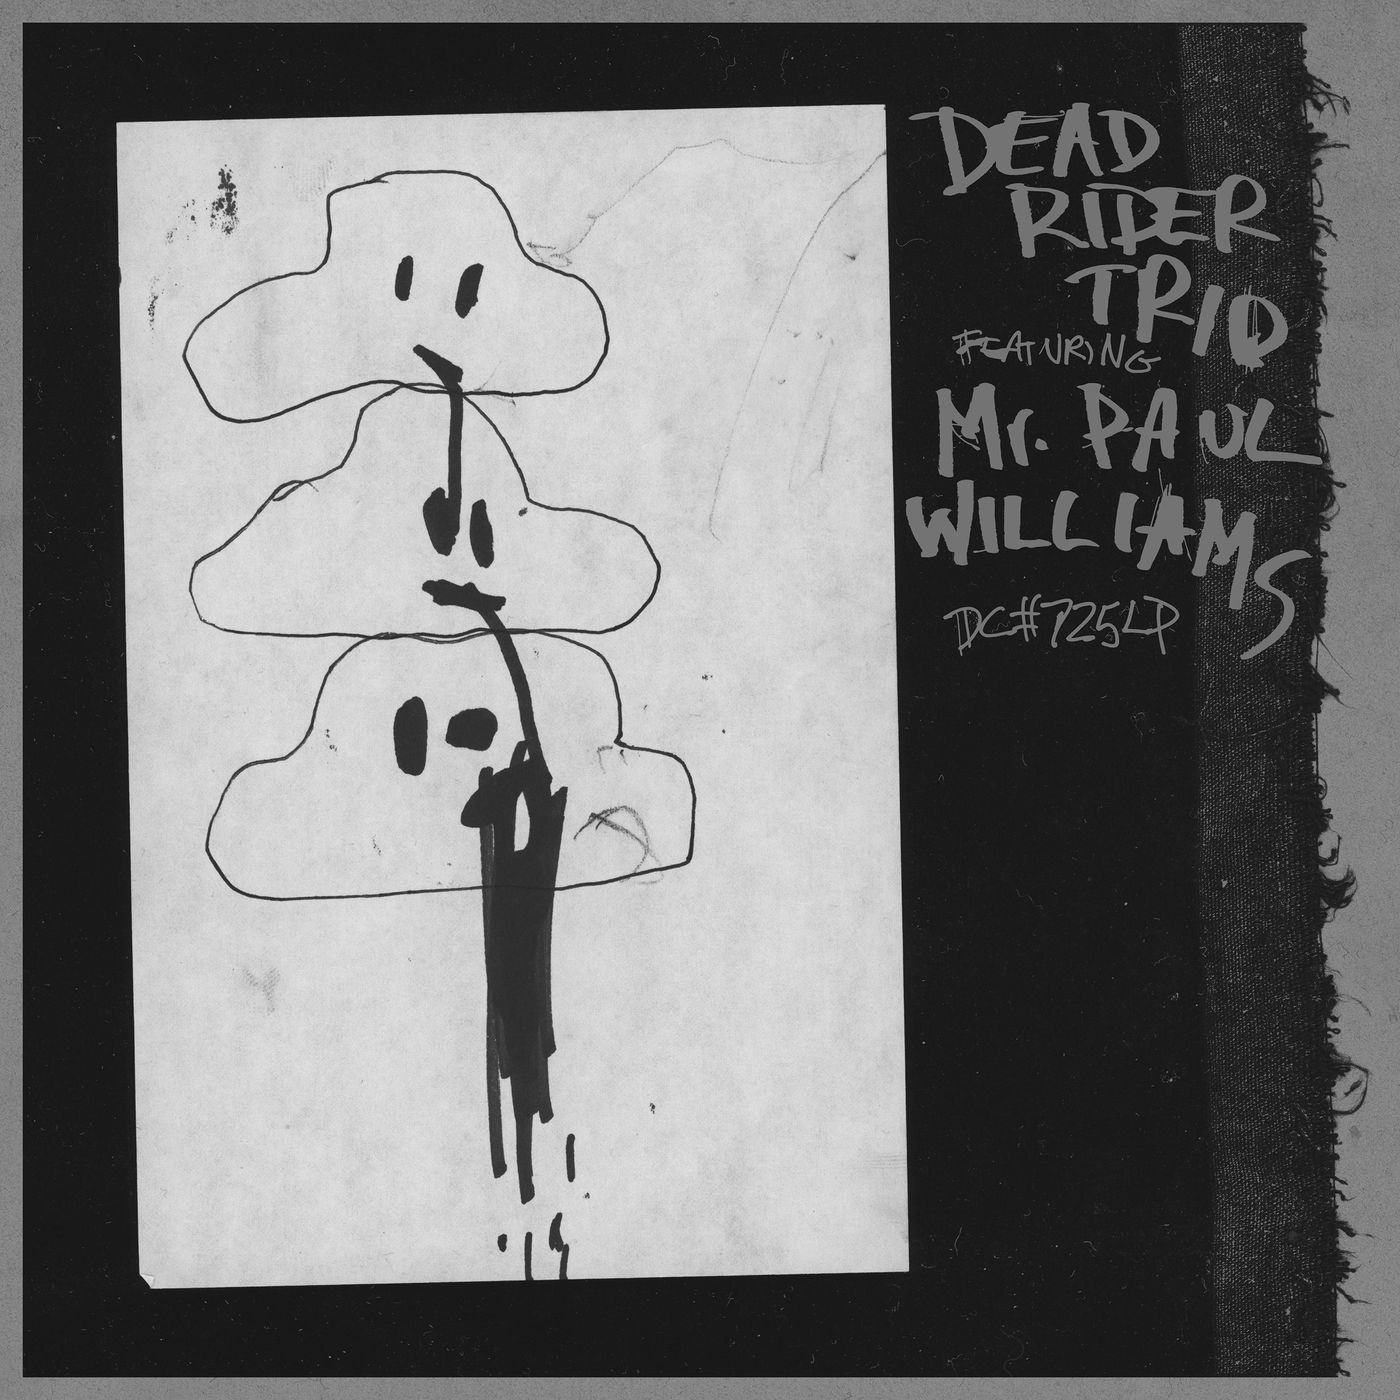 Dead Rider - Dead Rider Trio featuring Mr. Paul Williams (2018) Album Info